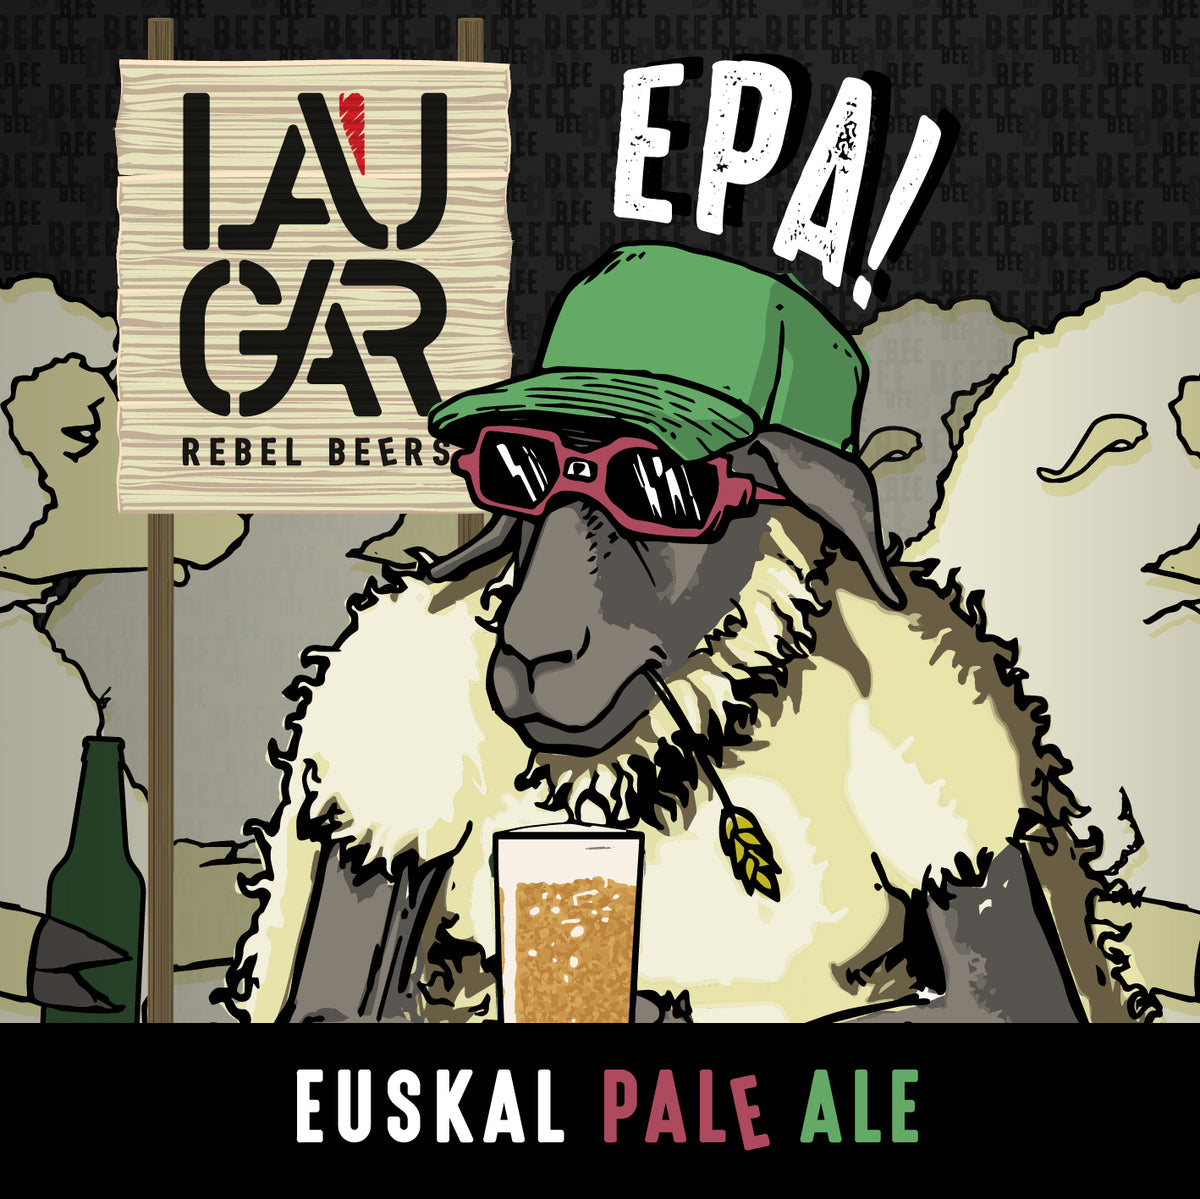 Laugar EPA! (botella 33cl) - Laugar Brewery